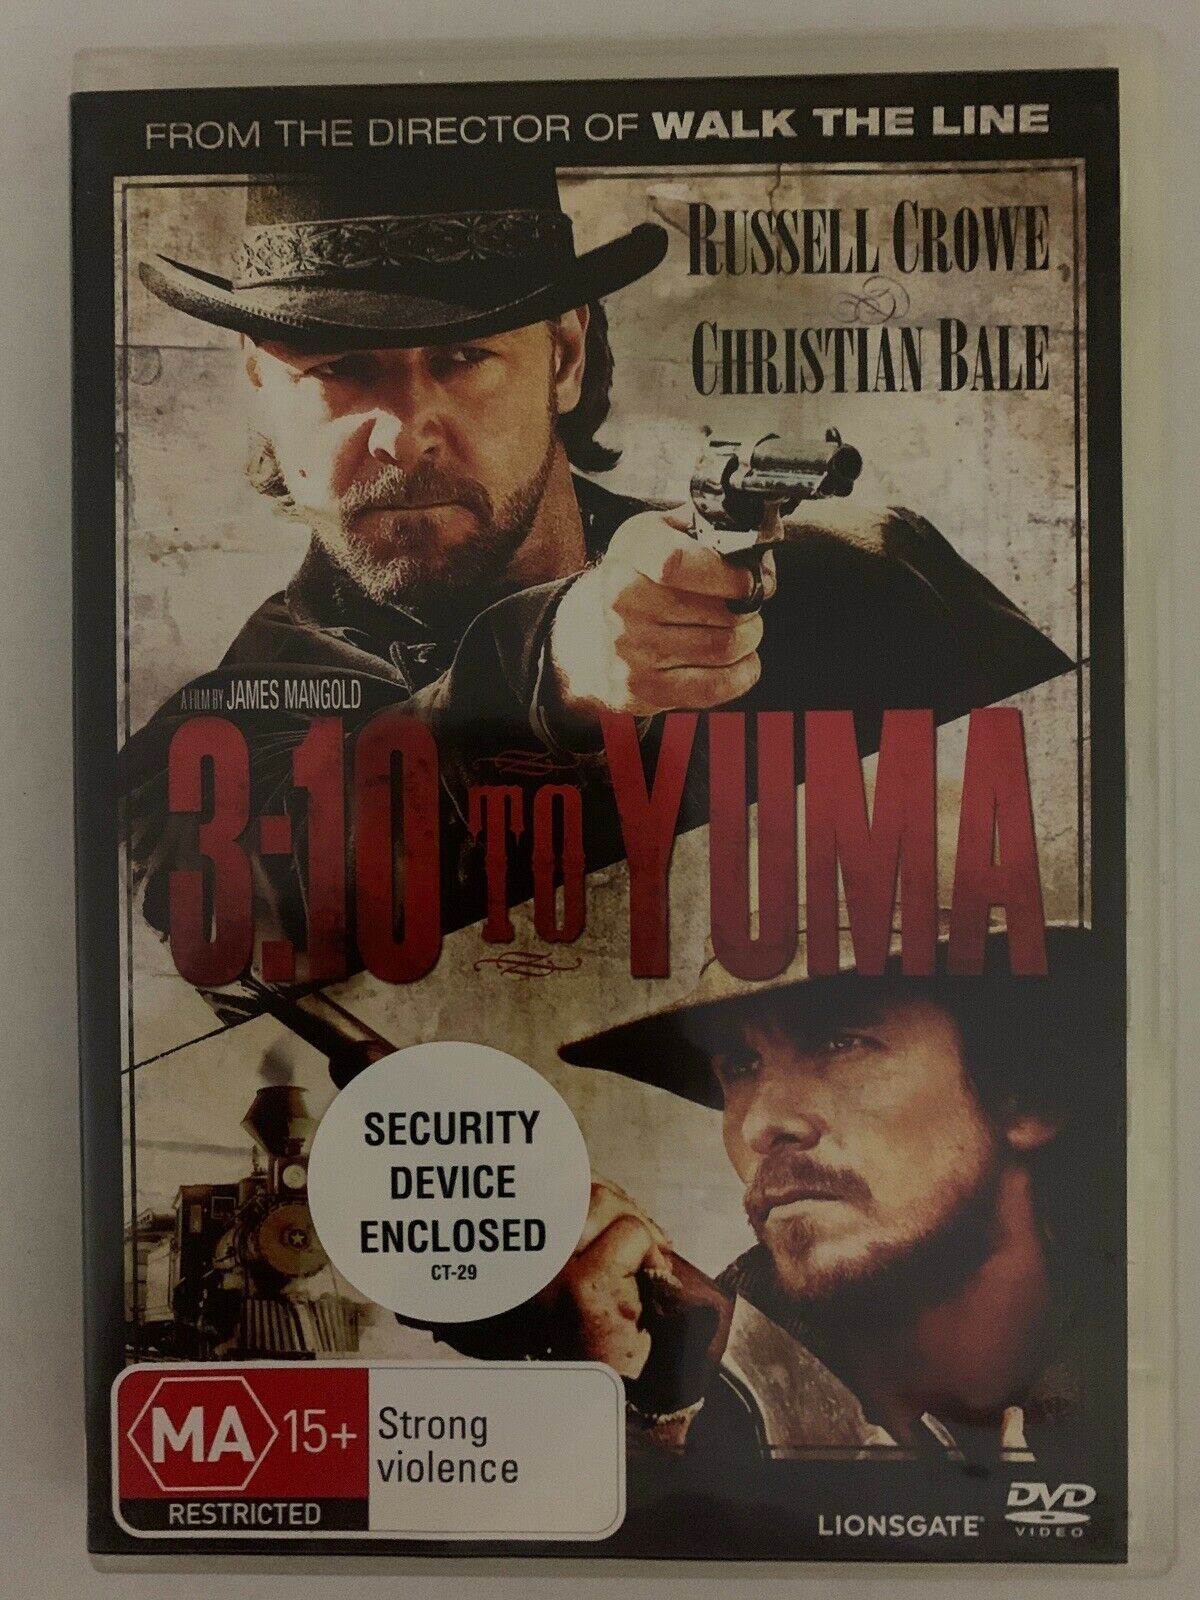 3:10 TO YUMA (DVD, 2007) Russell Crowe, Chritian Bale. Region 4